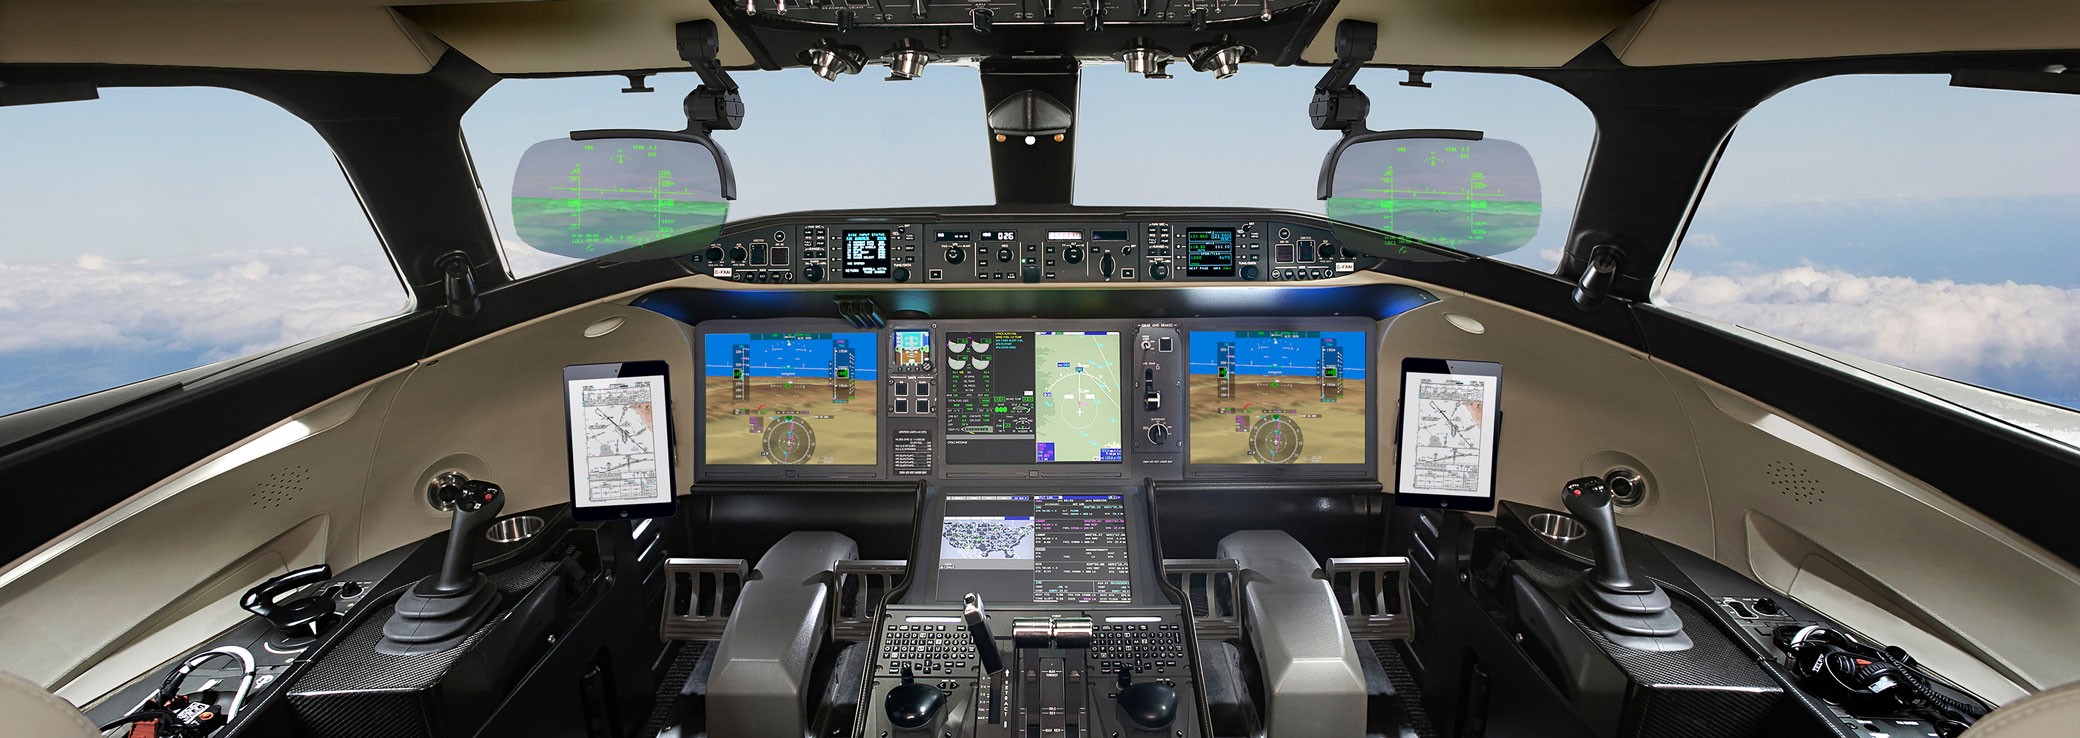 Global 8000 cockpit - Bombardier Vision flight deck